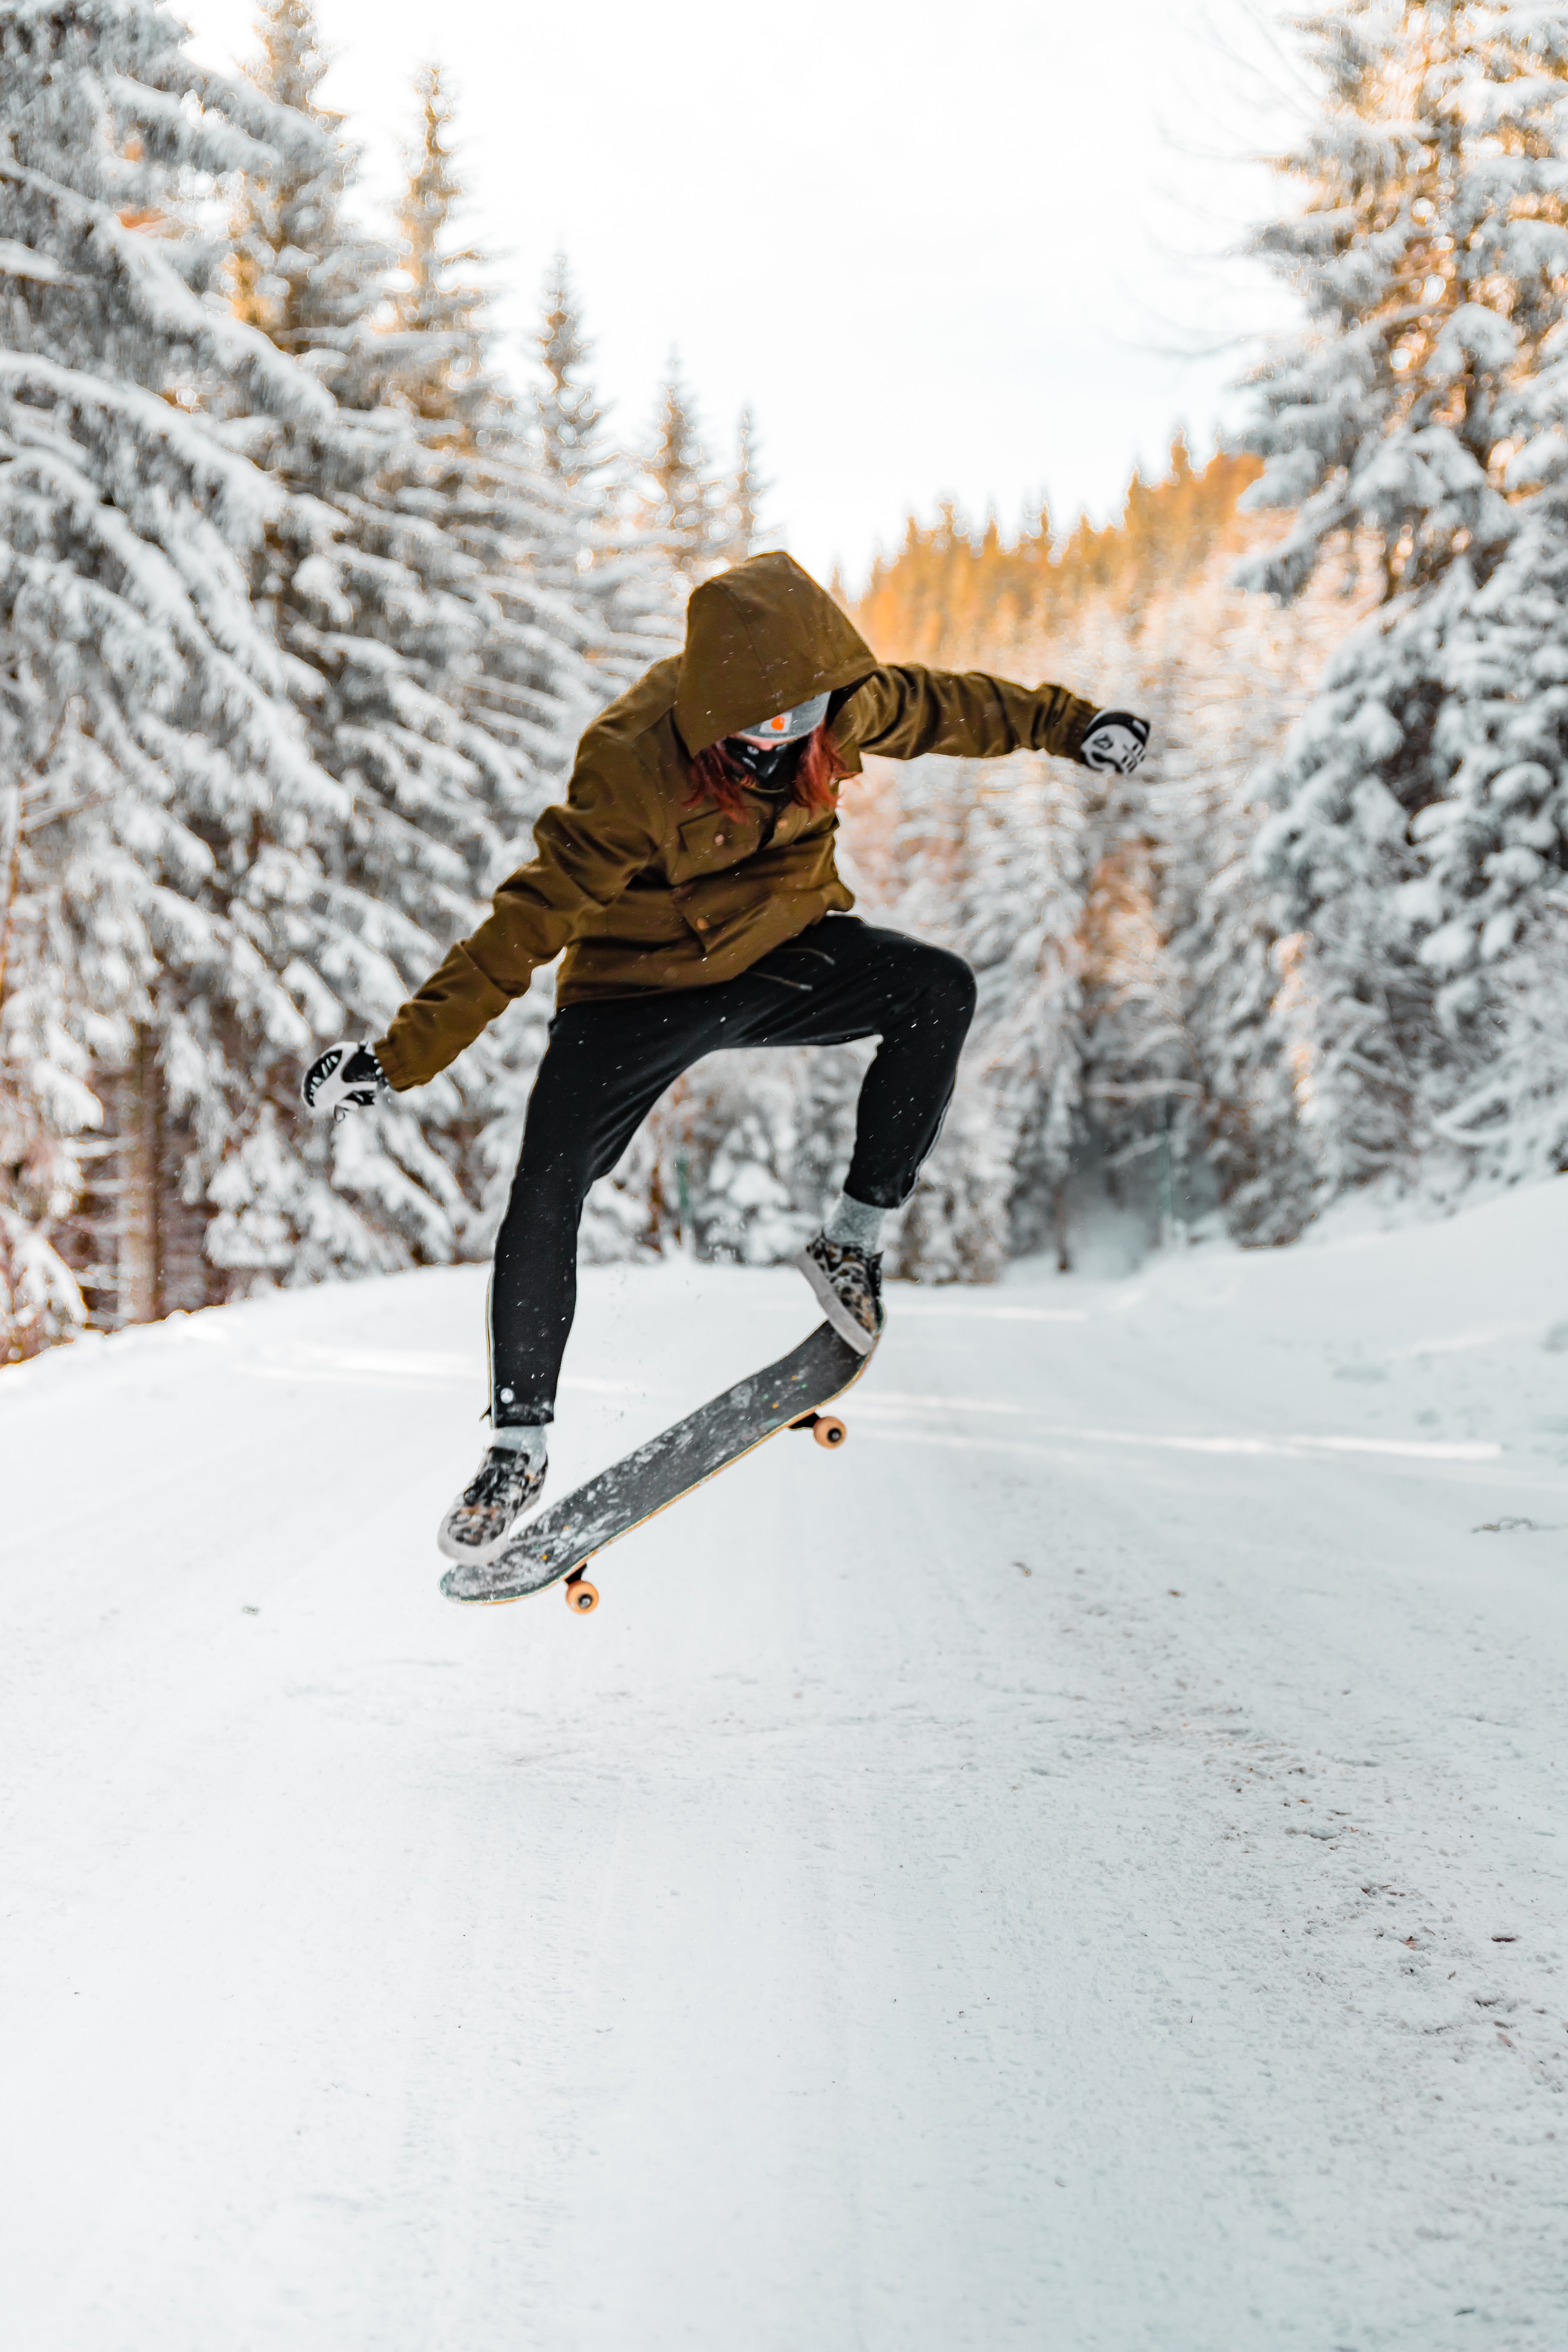 snow, sports, winter, bounce, jump, trick, skateboarder, skateboard